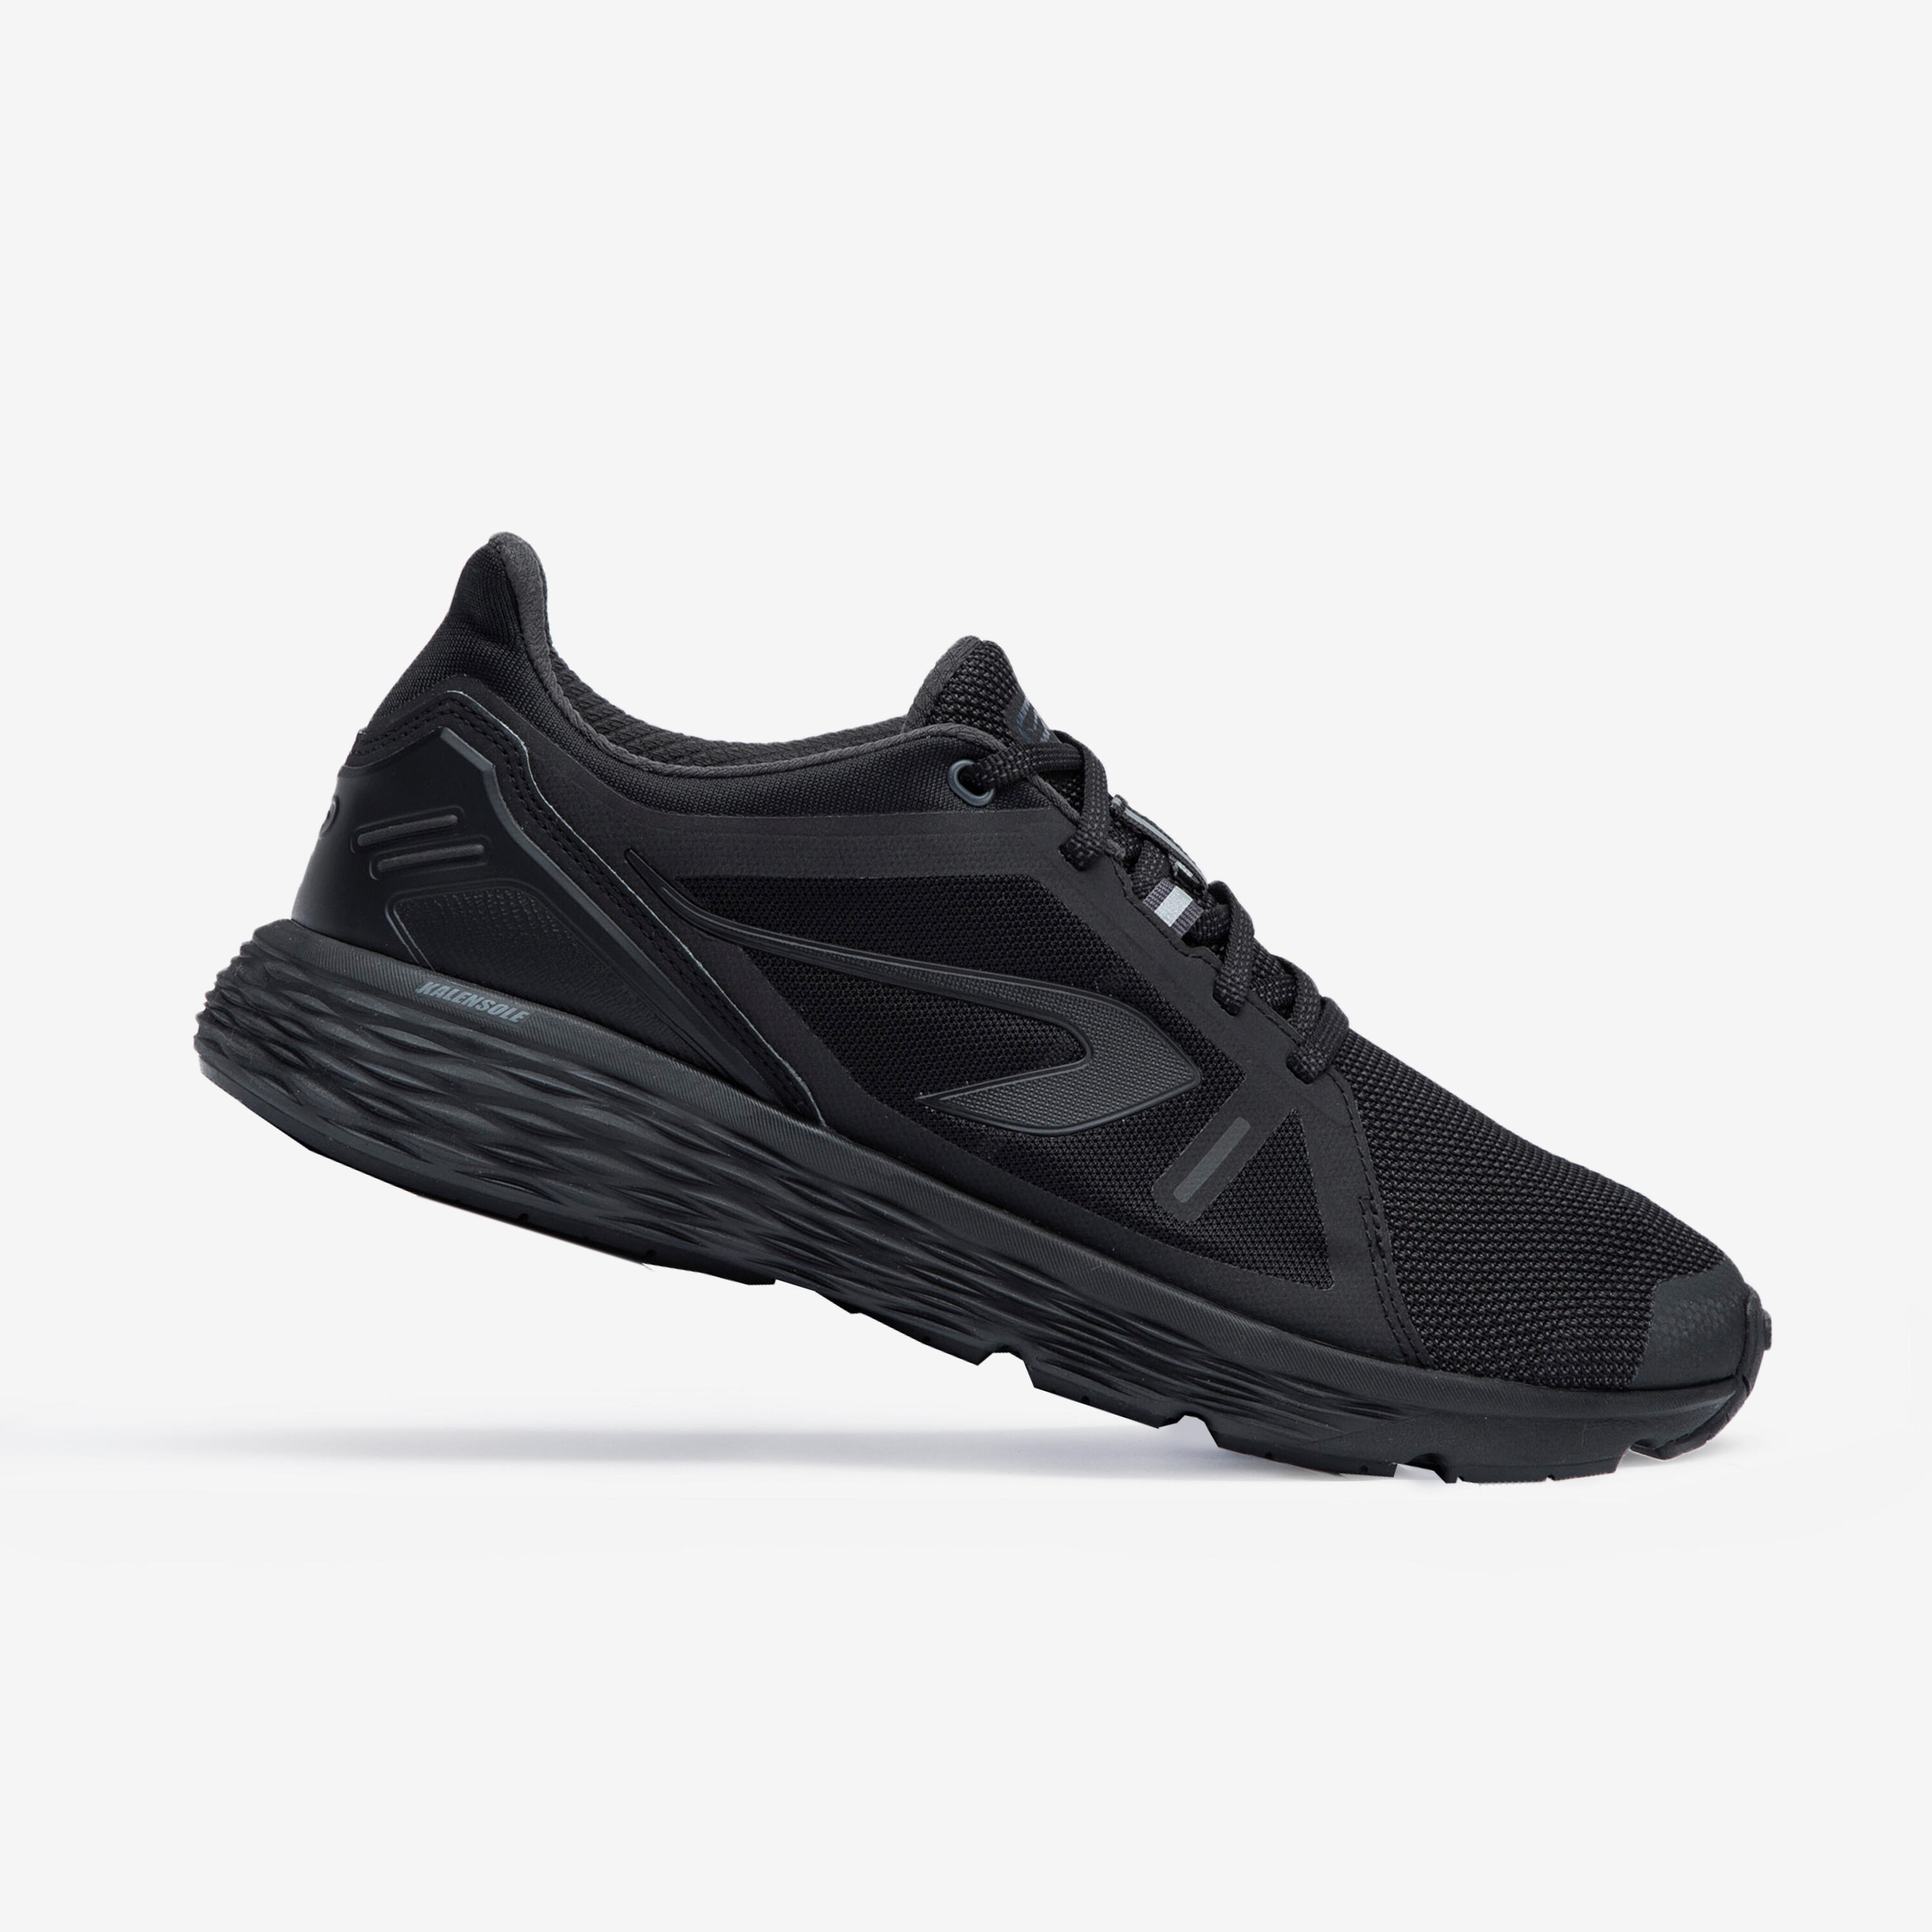 KALENJI Run Comfort Men's Running Shoes - Black